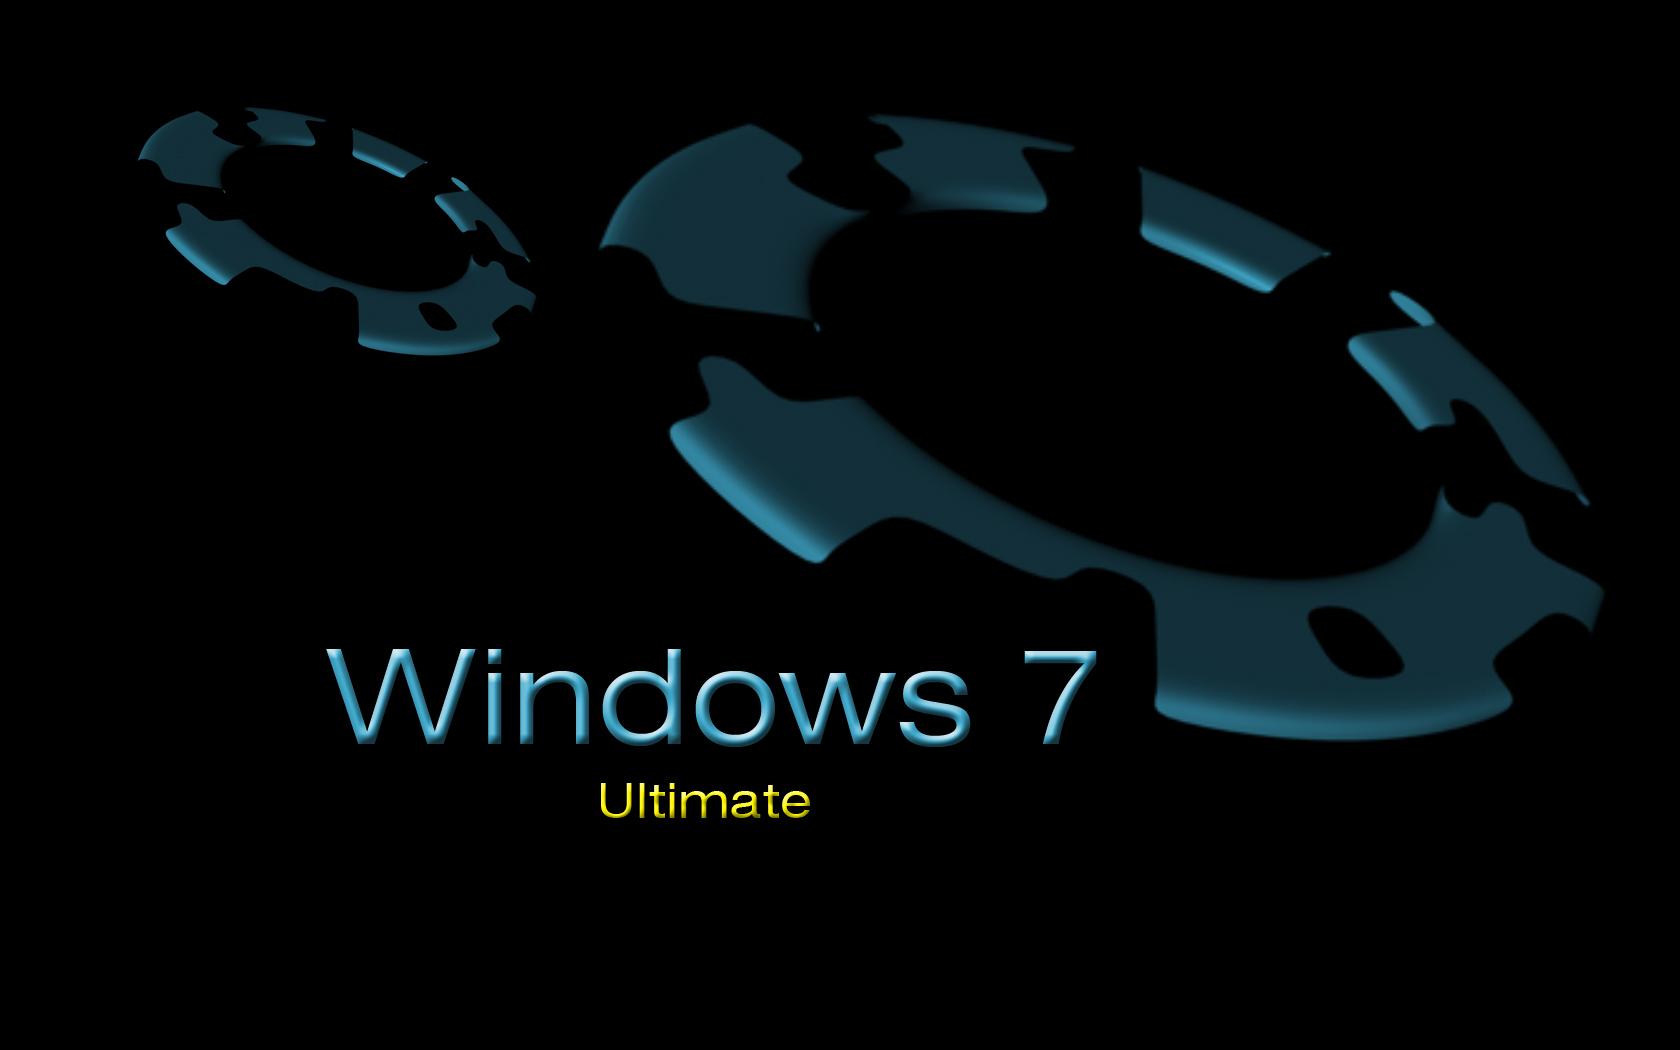 Free download VK34 Windows 7 Ultimate Wallpaper 1680x1050 4USkY